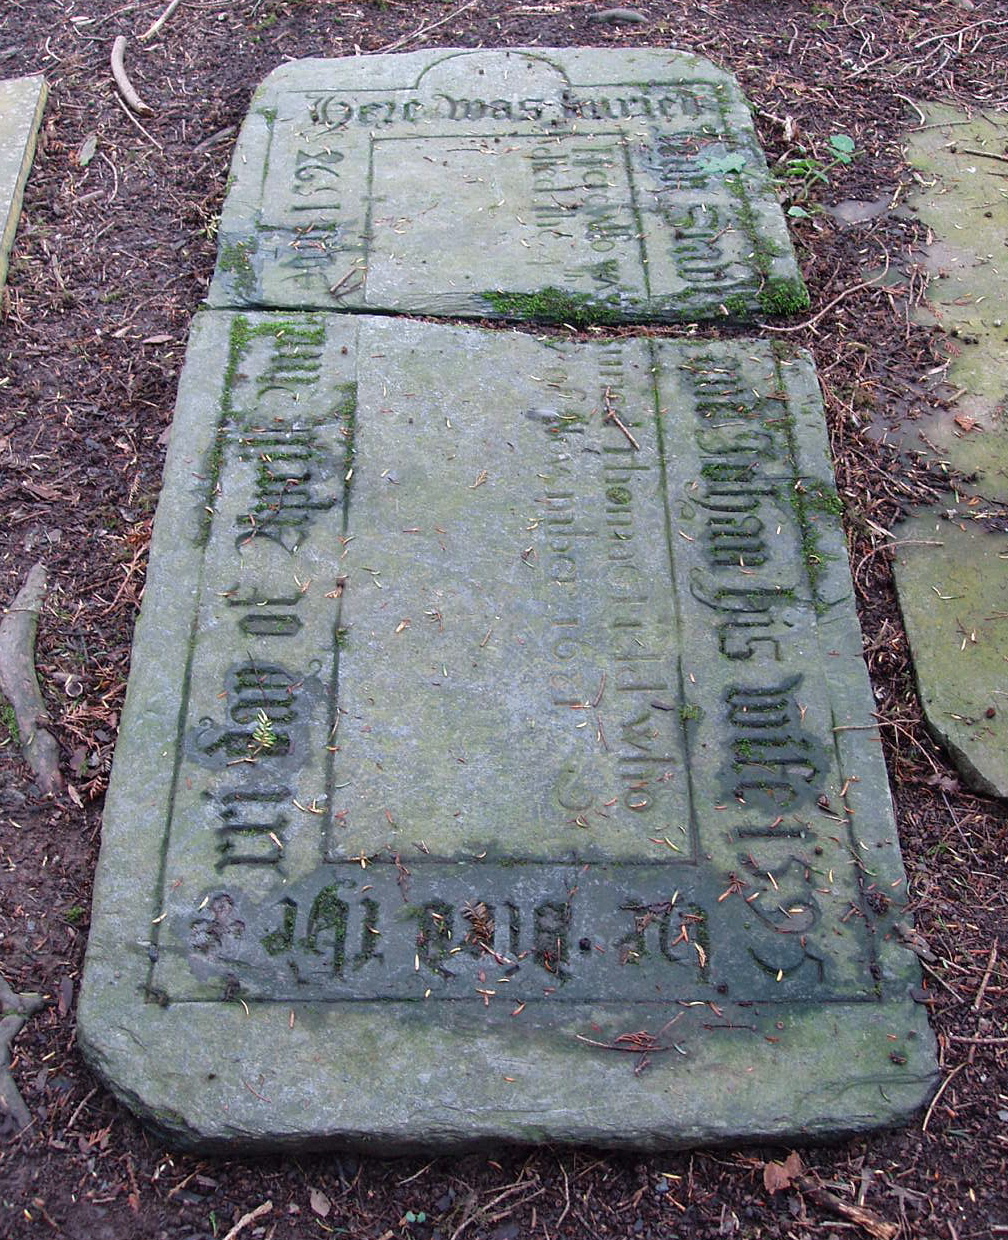 Gravestone from 1595